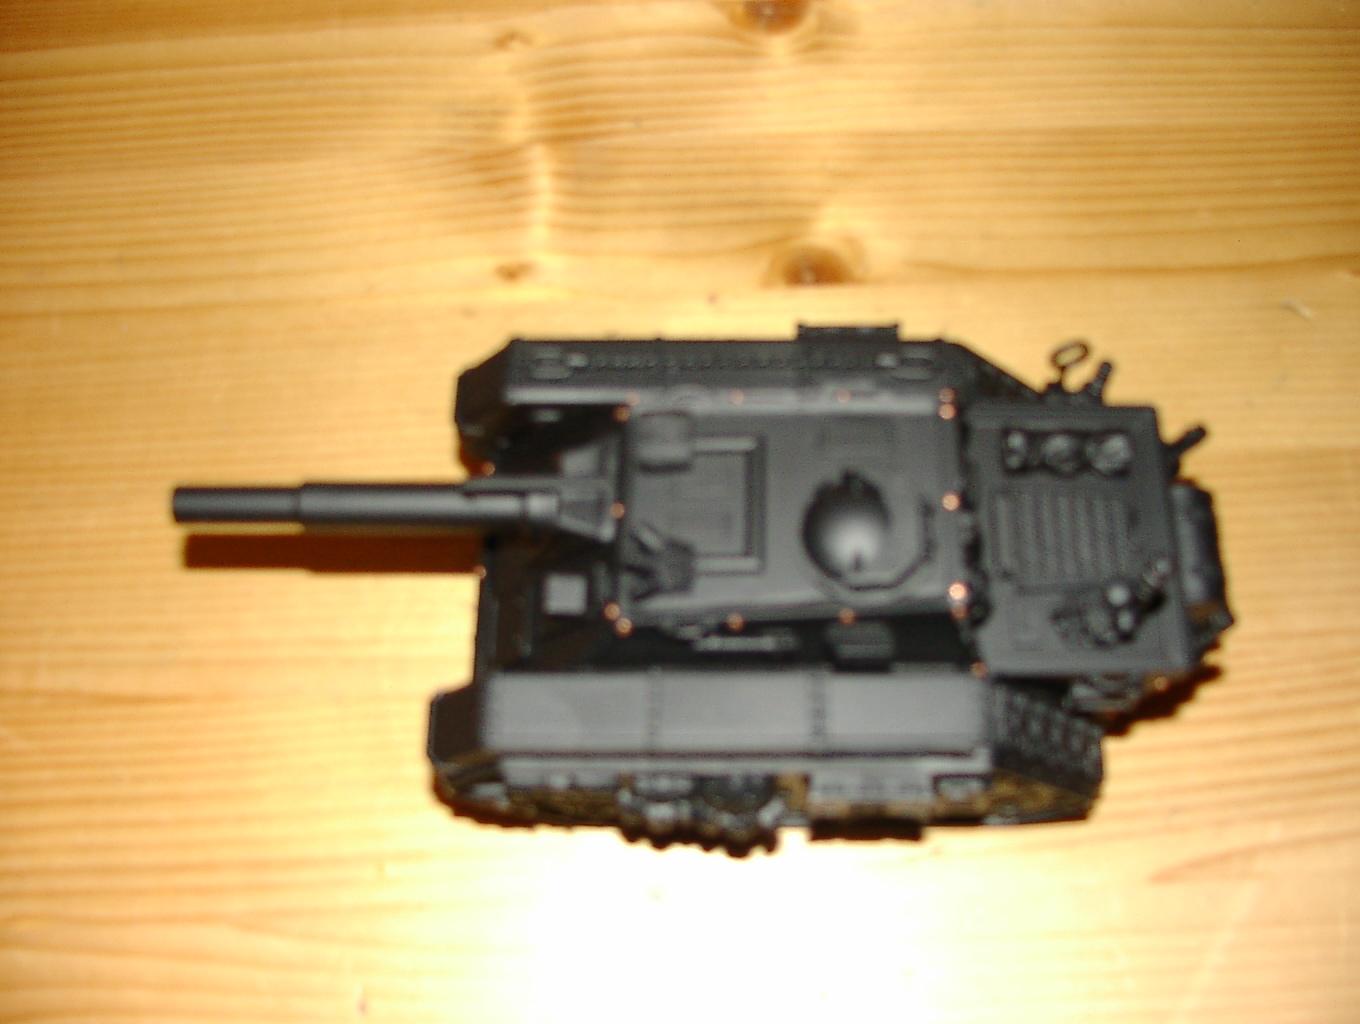 Tankhunter Destroyer